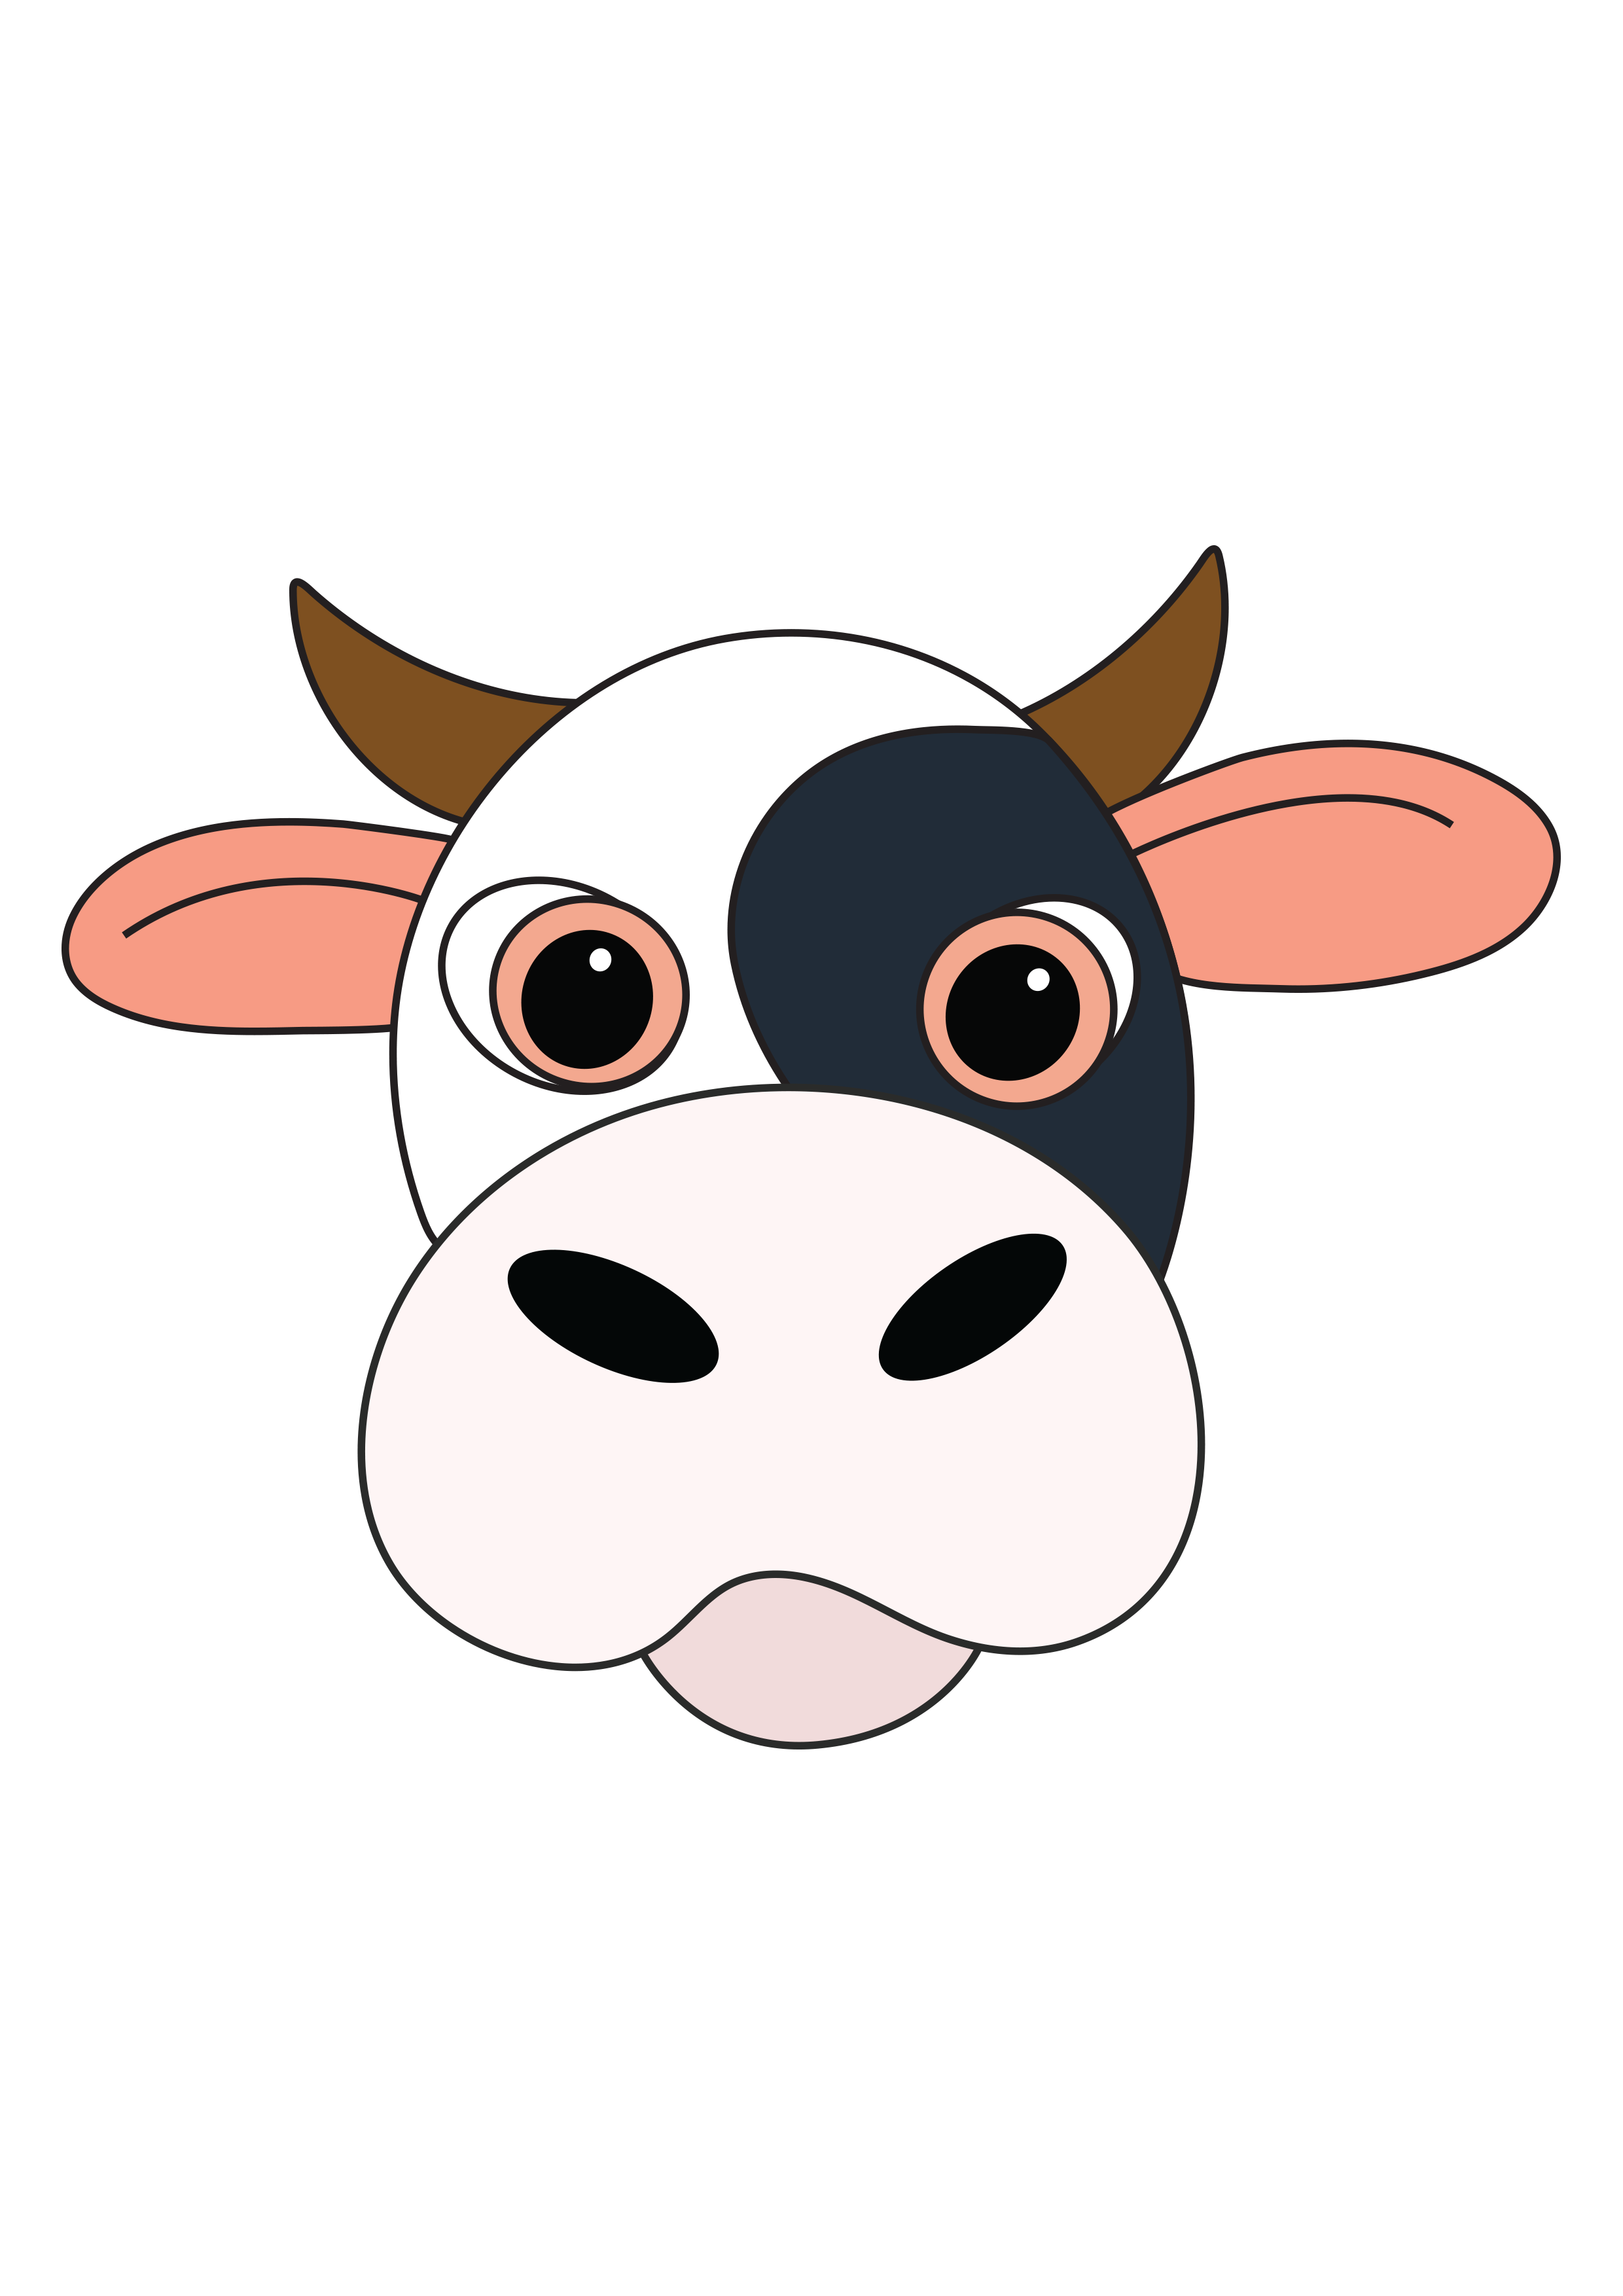 Cow Inu To Redefine Non-profit Segment With Their Utilities